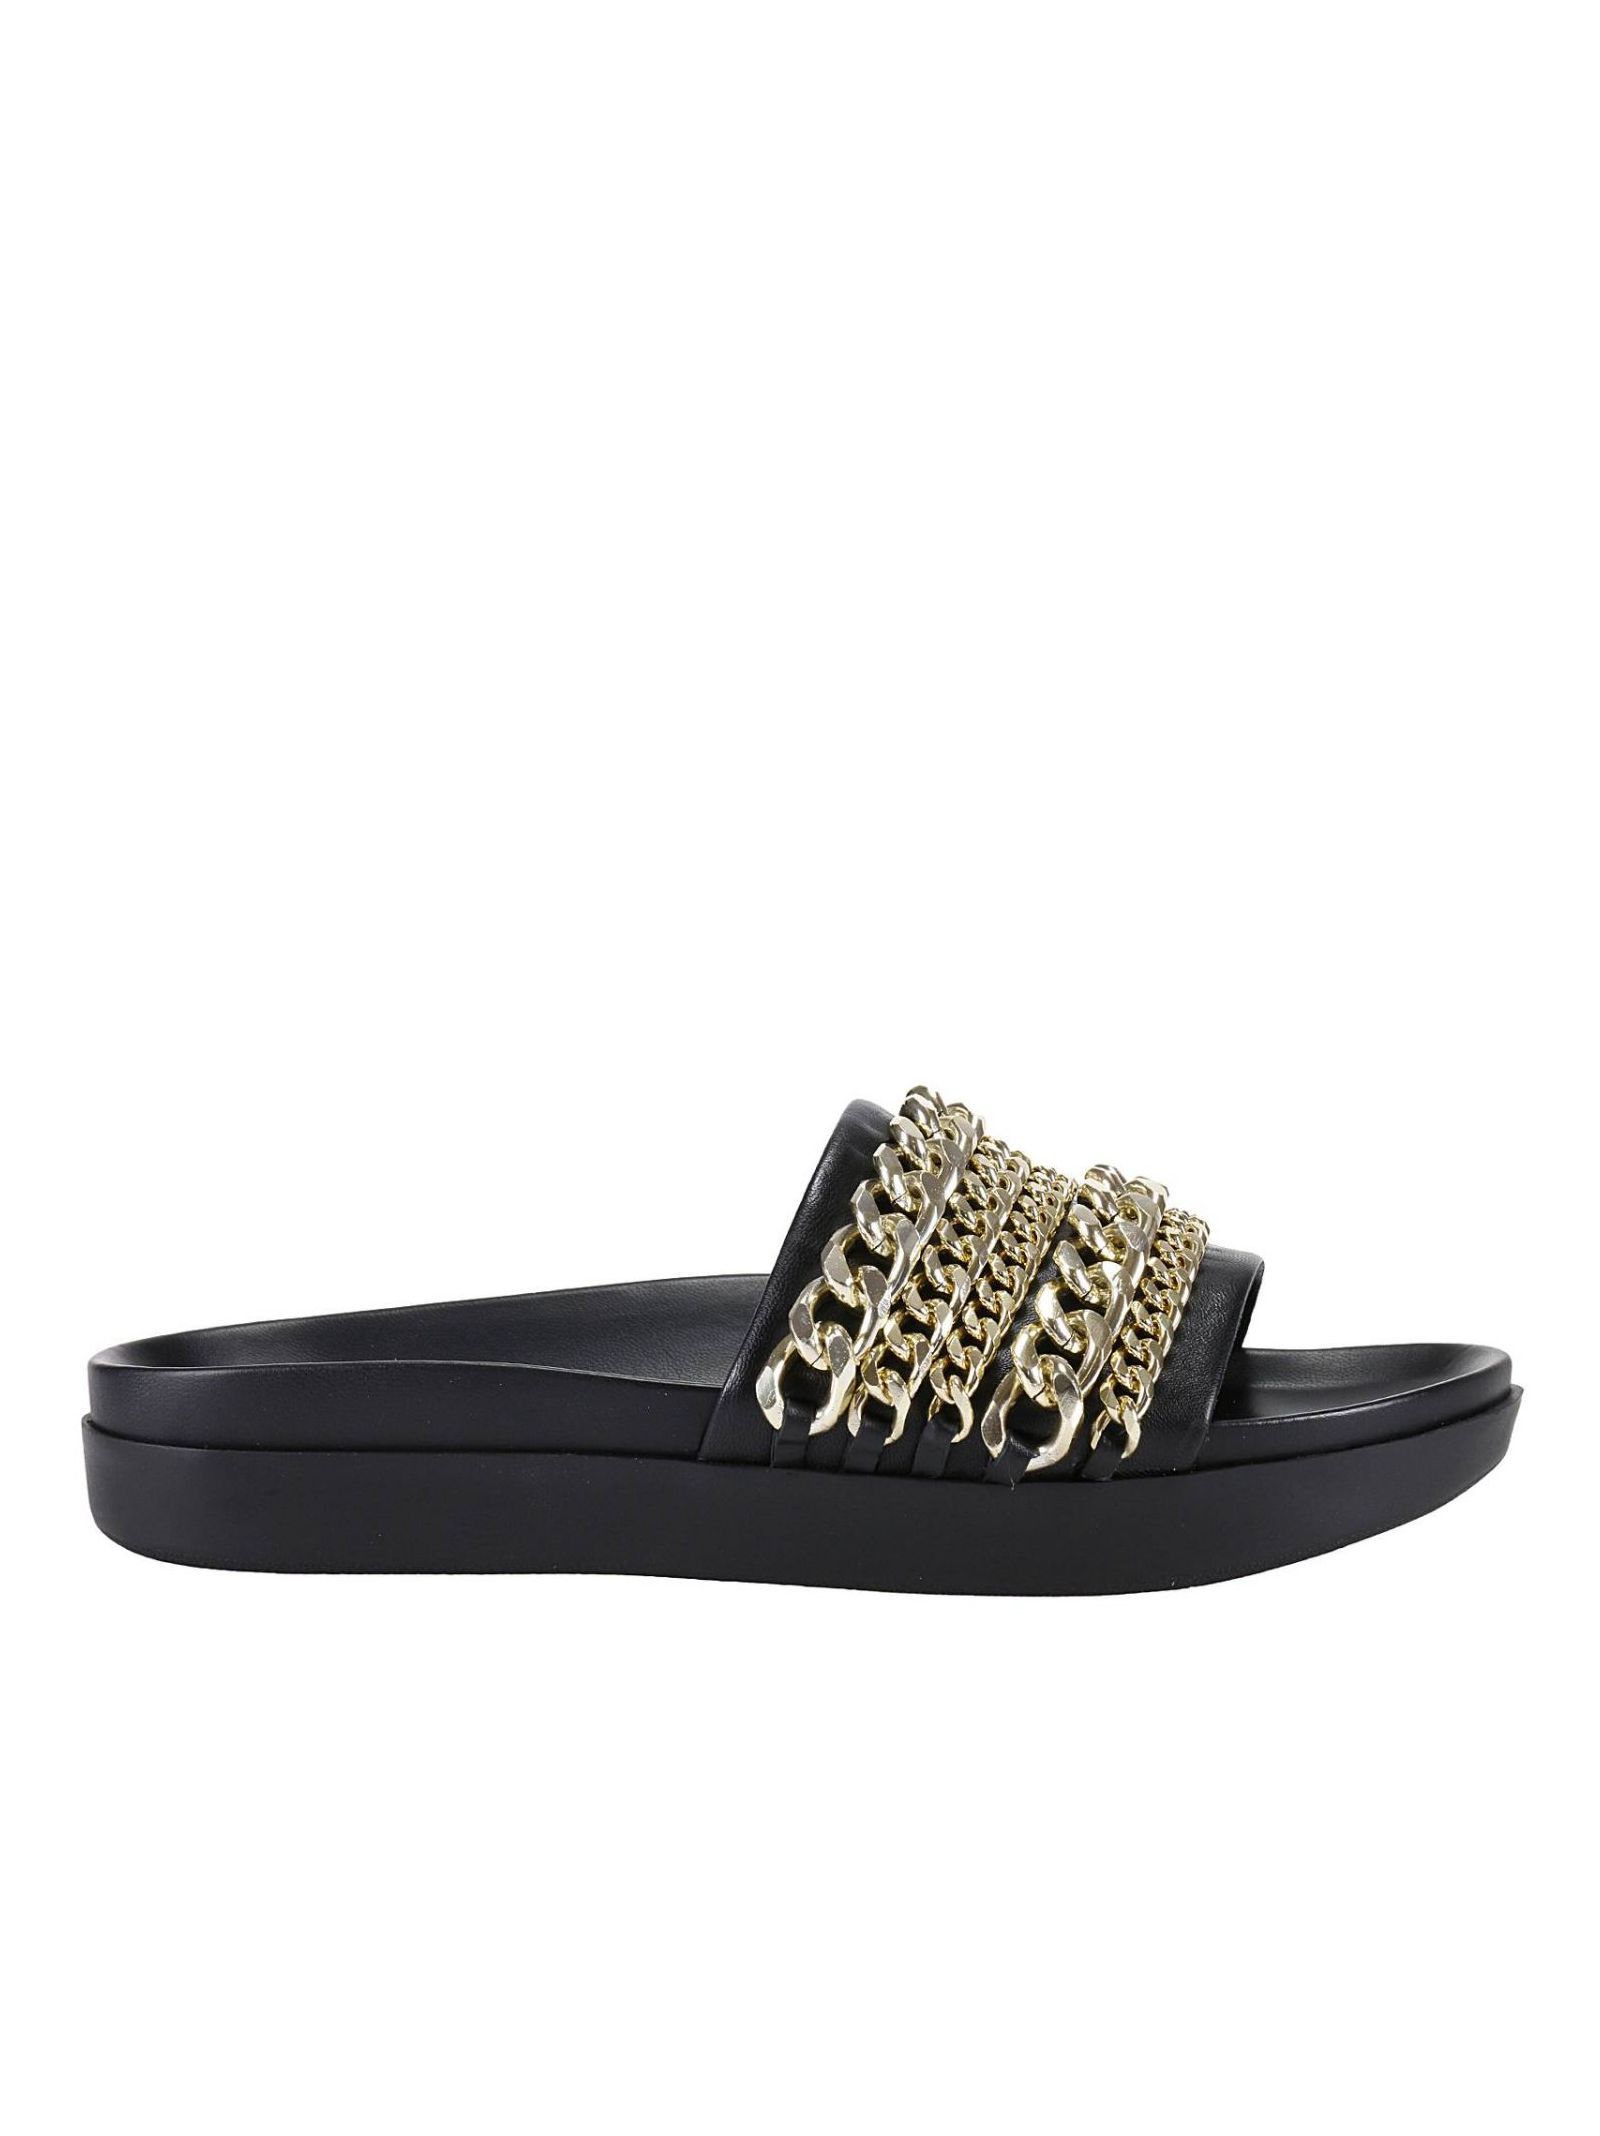 Flat Sandals Shoes Women Kendall + Kylie | Italist.com US